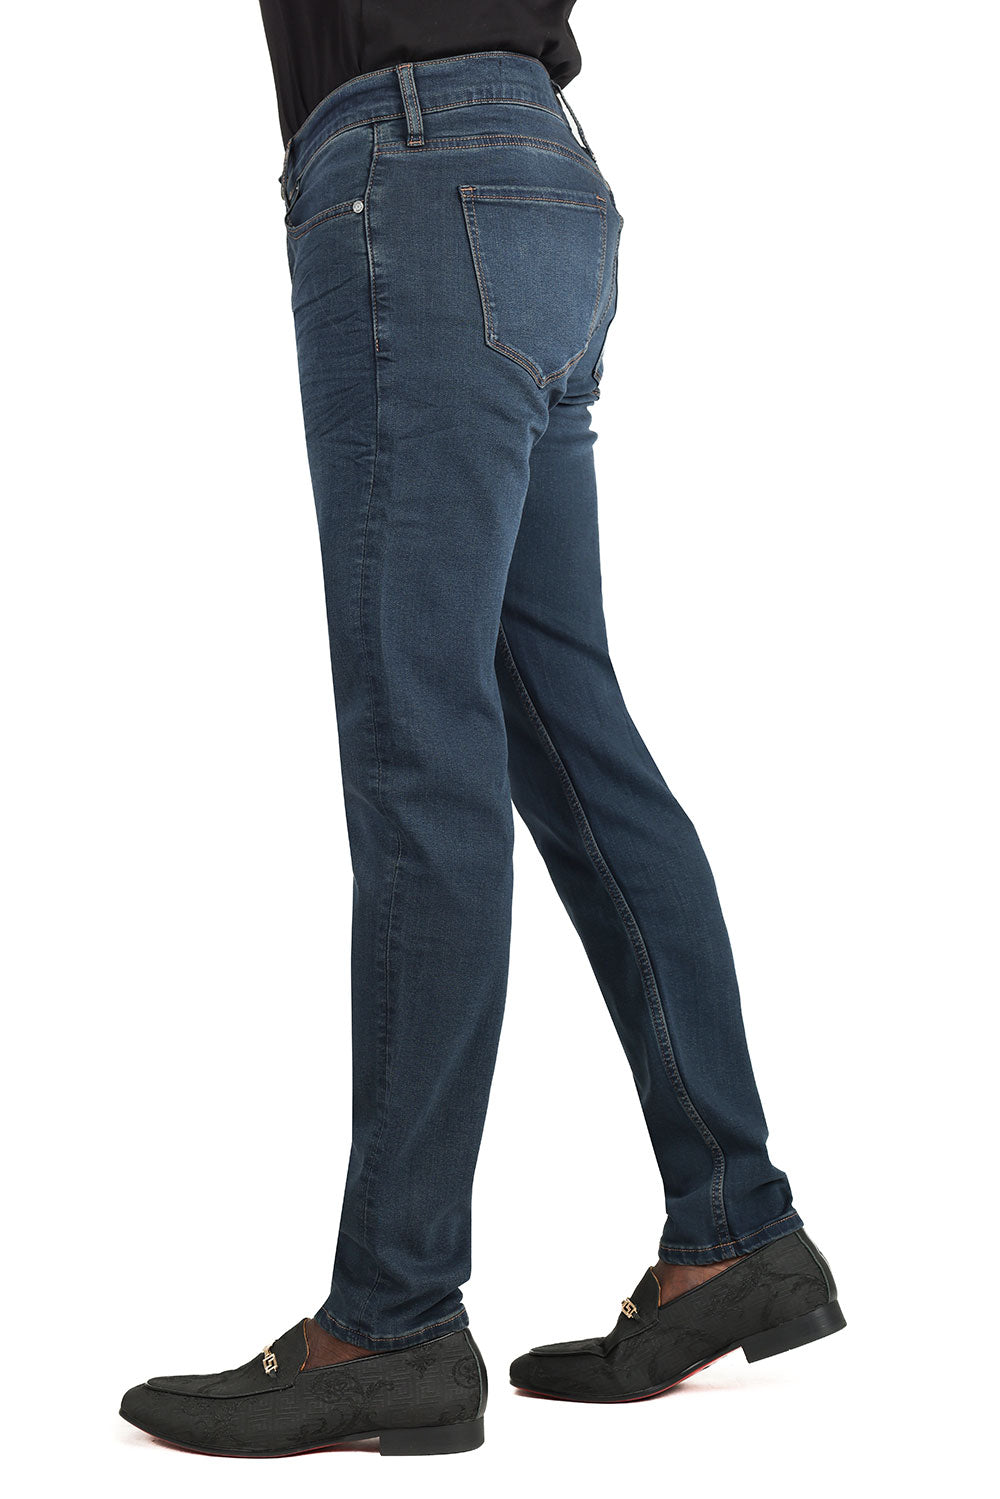 Barabas Men's Straight Fit Premium Dark Blue Denim Jeans 2JE13SL Dark Blue